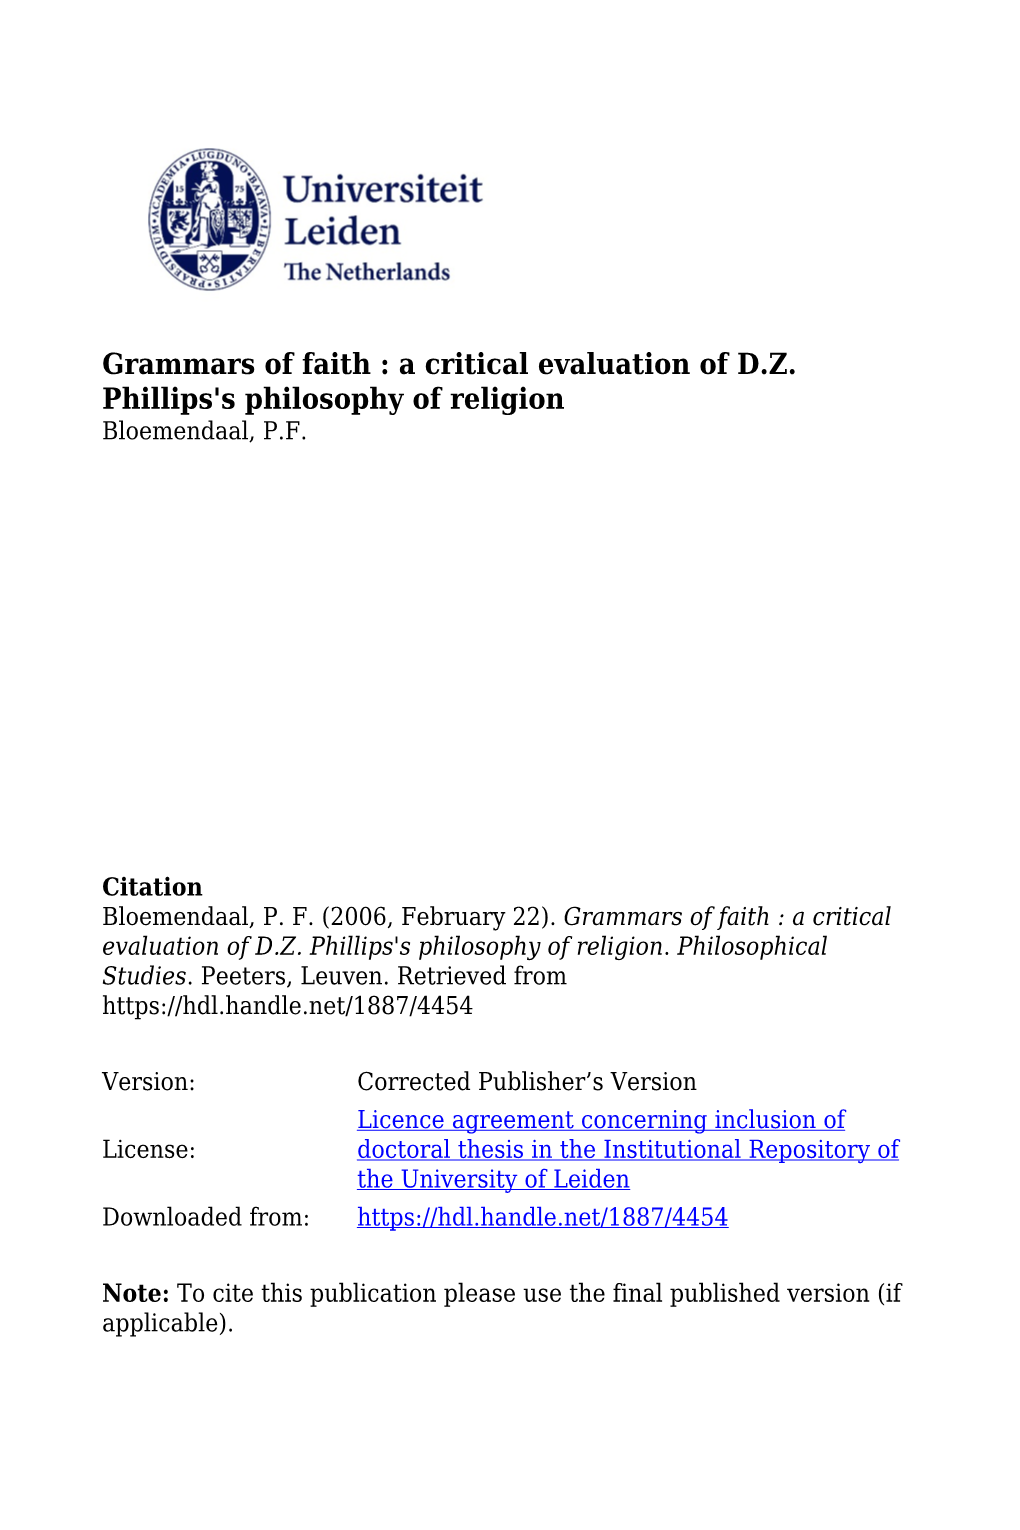 Grammars of Faith : a Critical Evaluation of D.Z